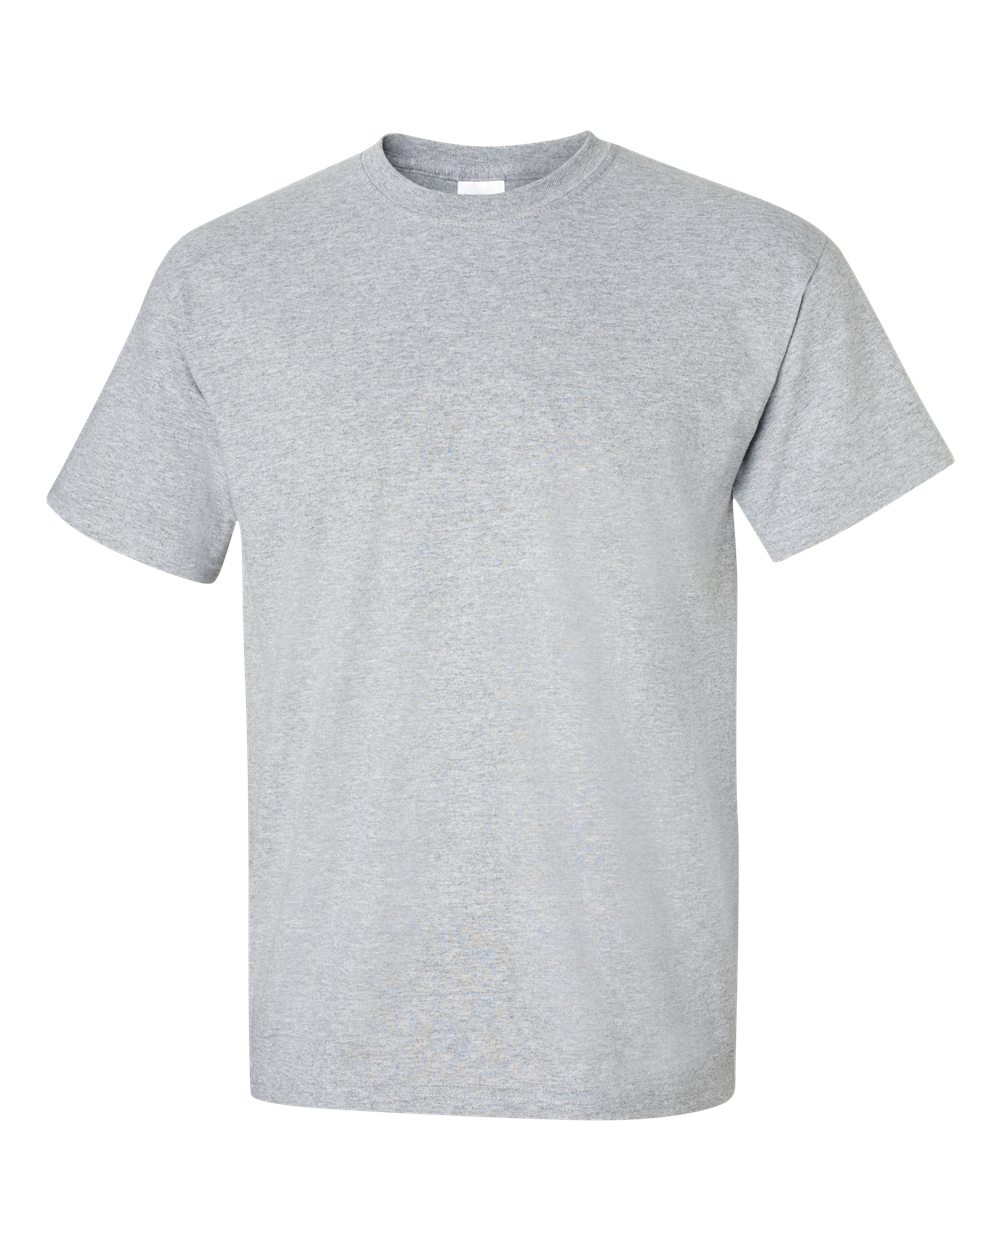 Pretreated Gildan 2000 Ultra Cotton T-Shirt